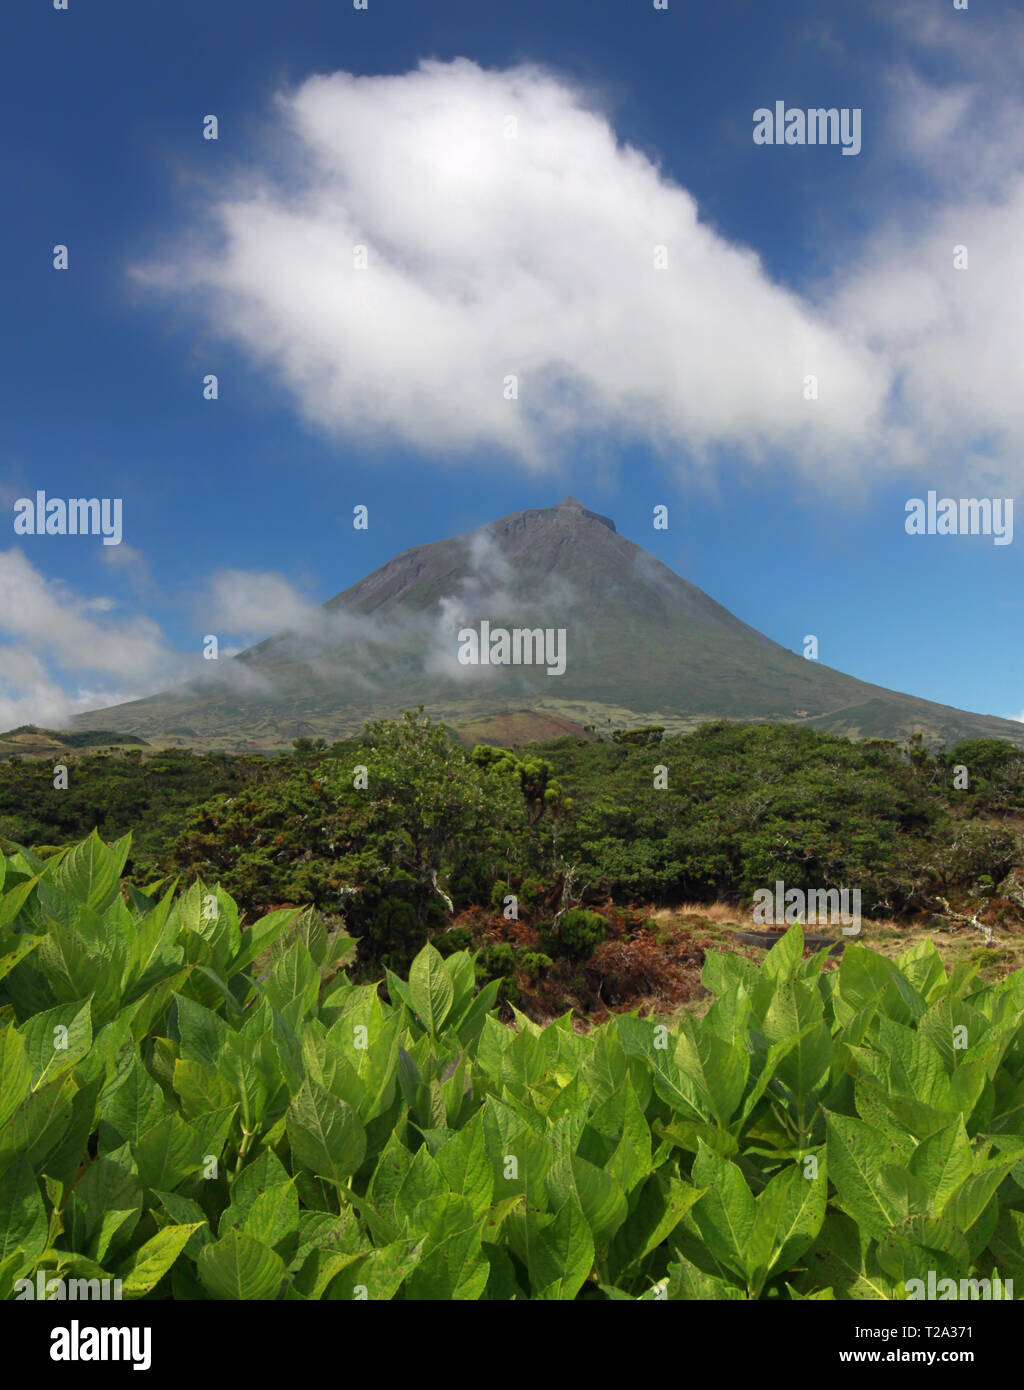 Volcano Mount Pico at Pico island, Azores Stock Photo